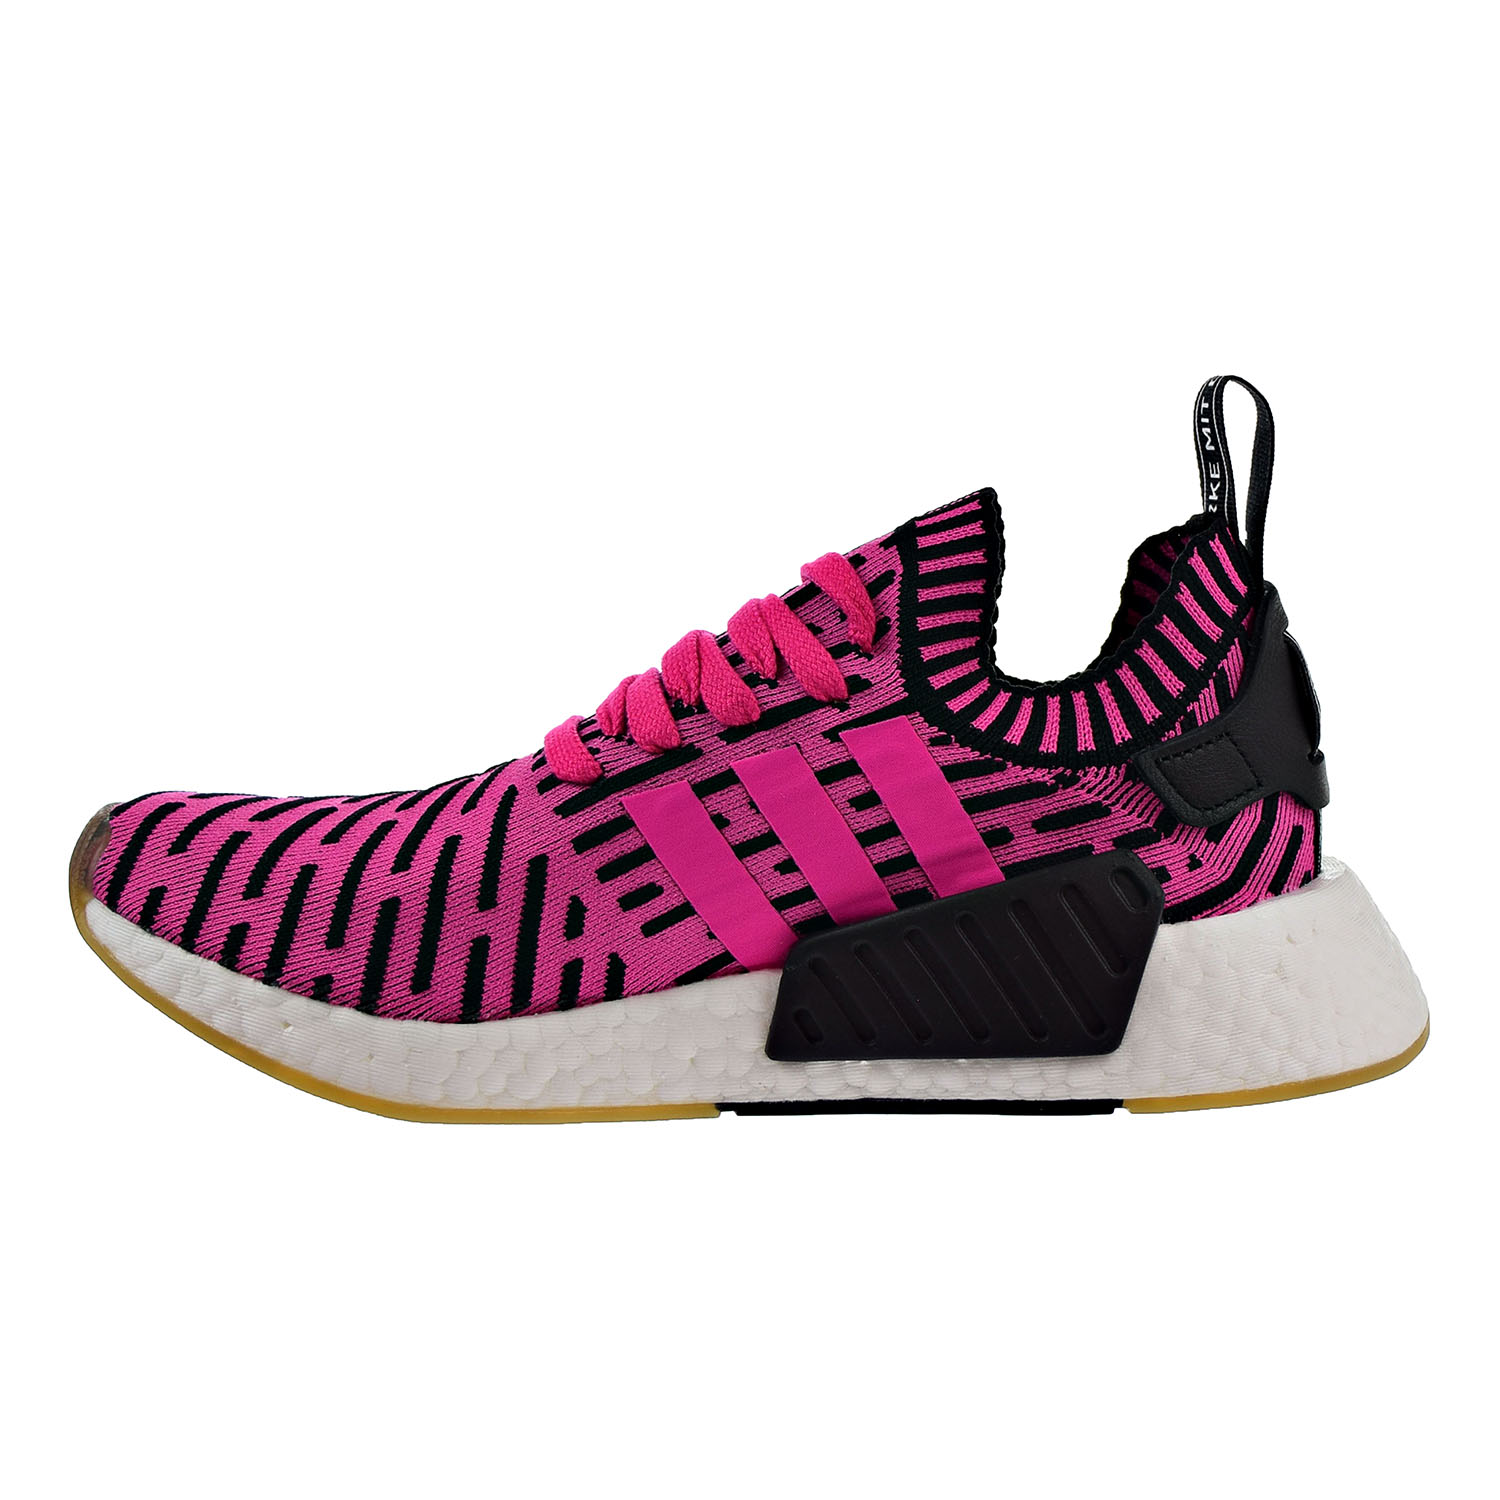 Adidas Originals NMD_R2 Primeknit Men's Shoes Pink-Pink-Core Black ...